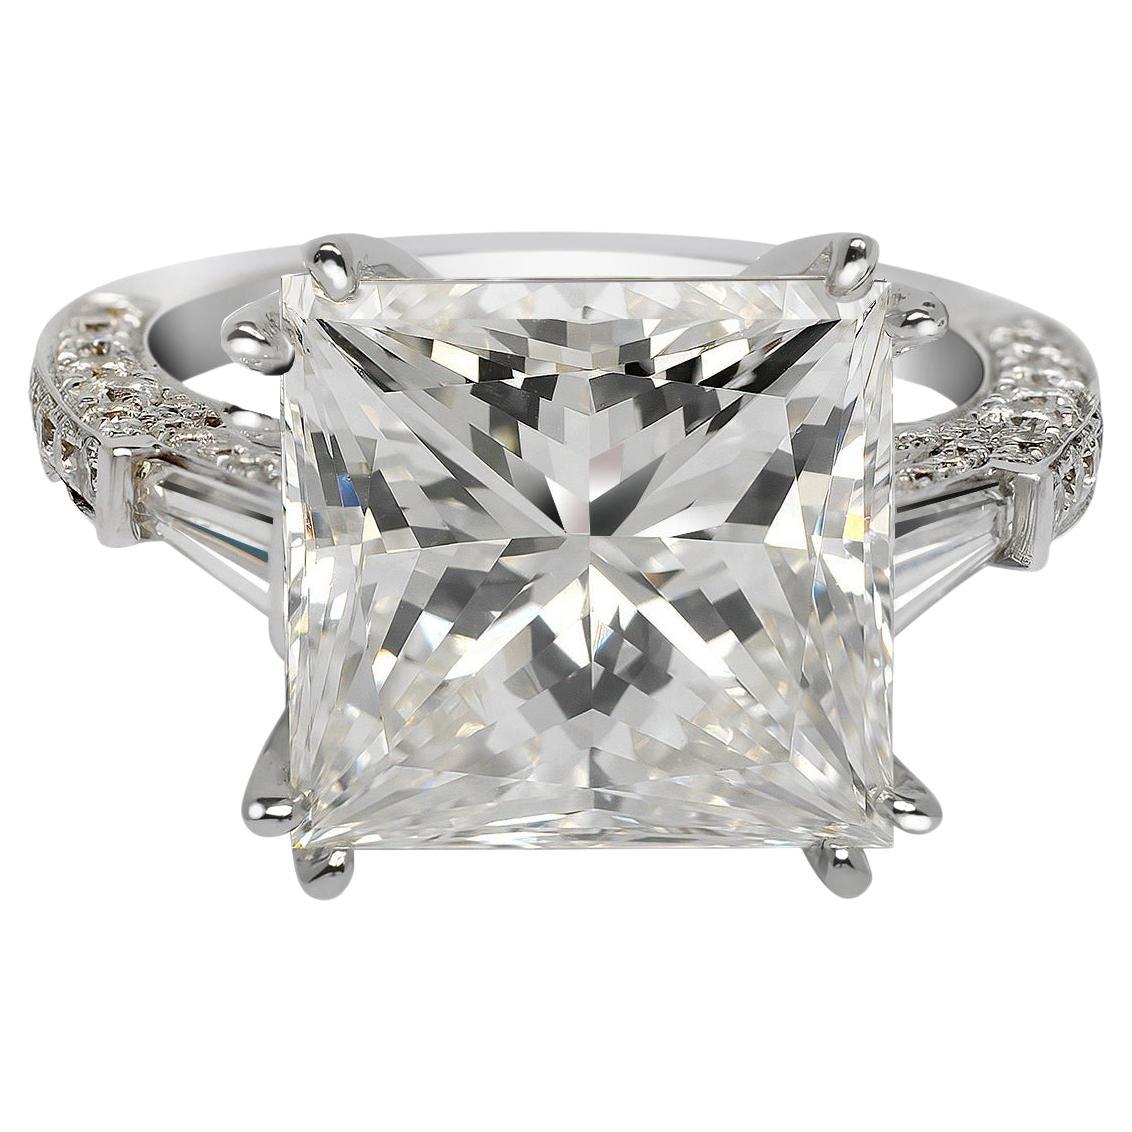 10 Carat Princess Cut Diamond Engagement Ring GIA Certified J VS2 For Sale